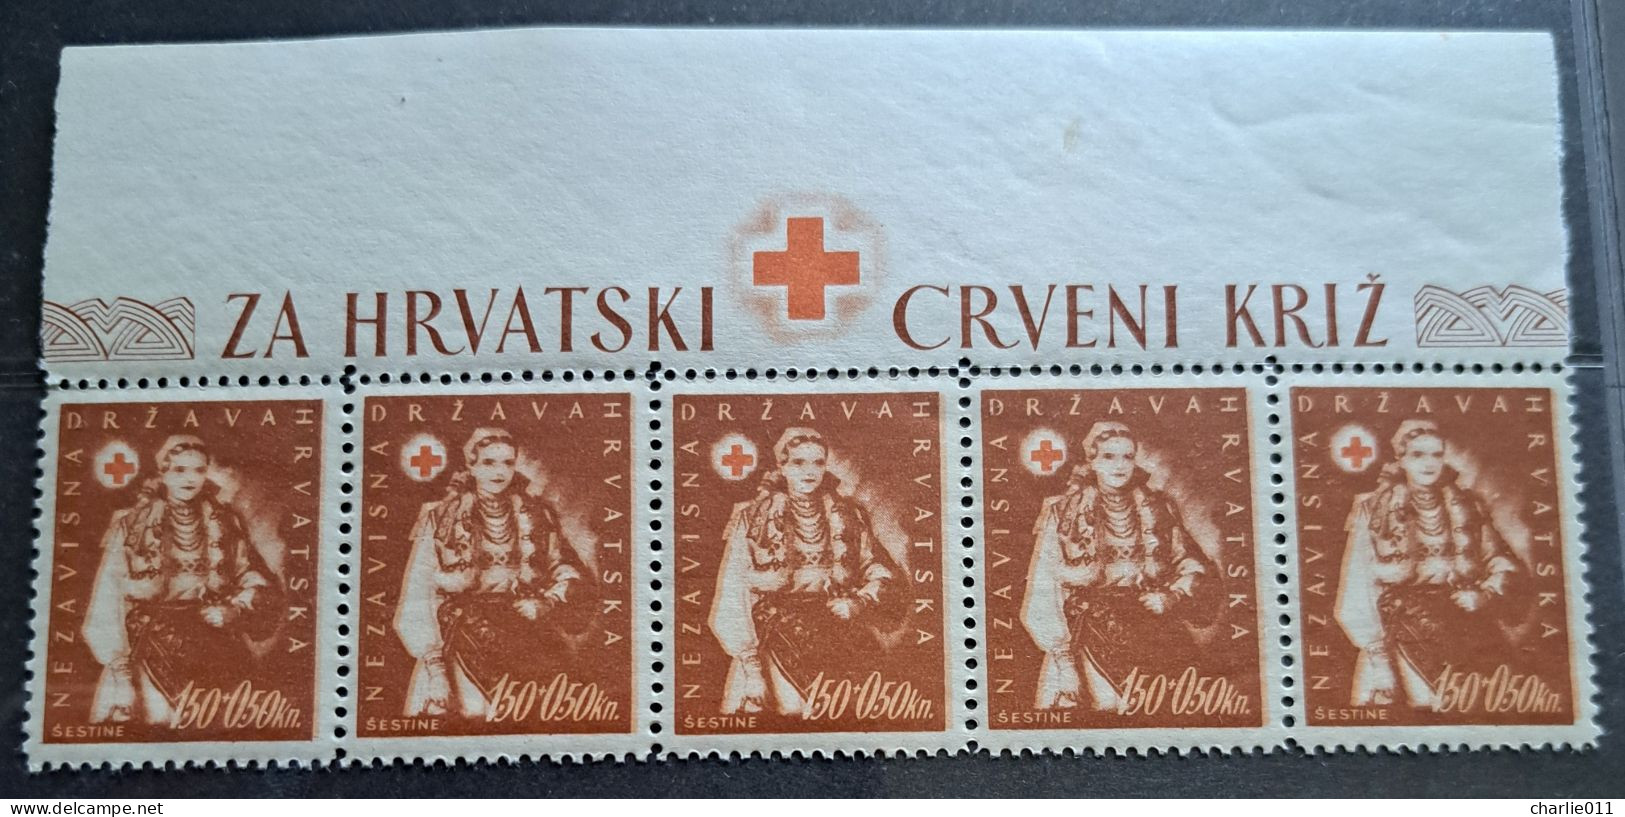 RED CROSS-1.50 + 0.50 K-NATIONAL COSTUMES-ŠESTINE-TOP OF THE SHEETLET-NDH-CROATIA-1942 - Croazia